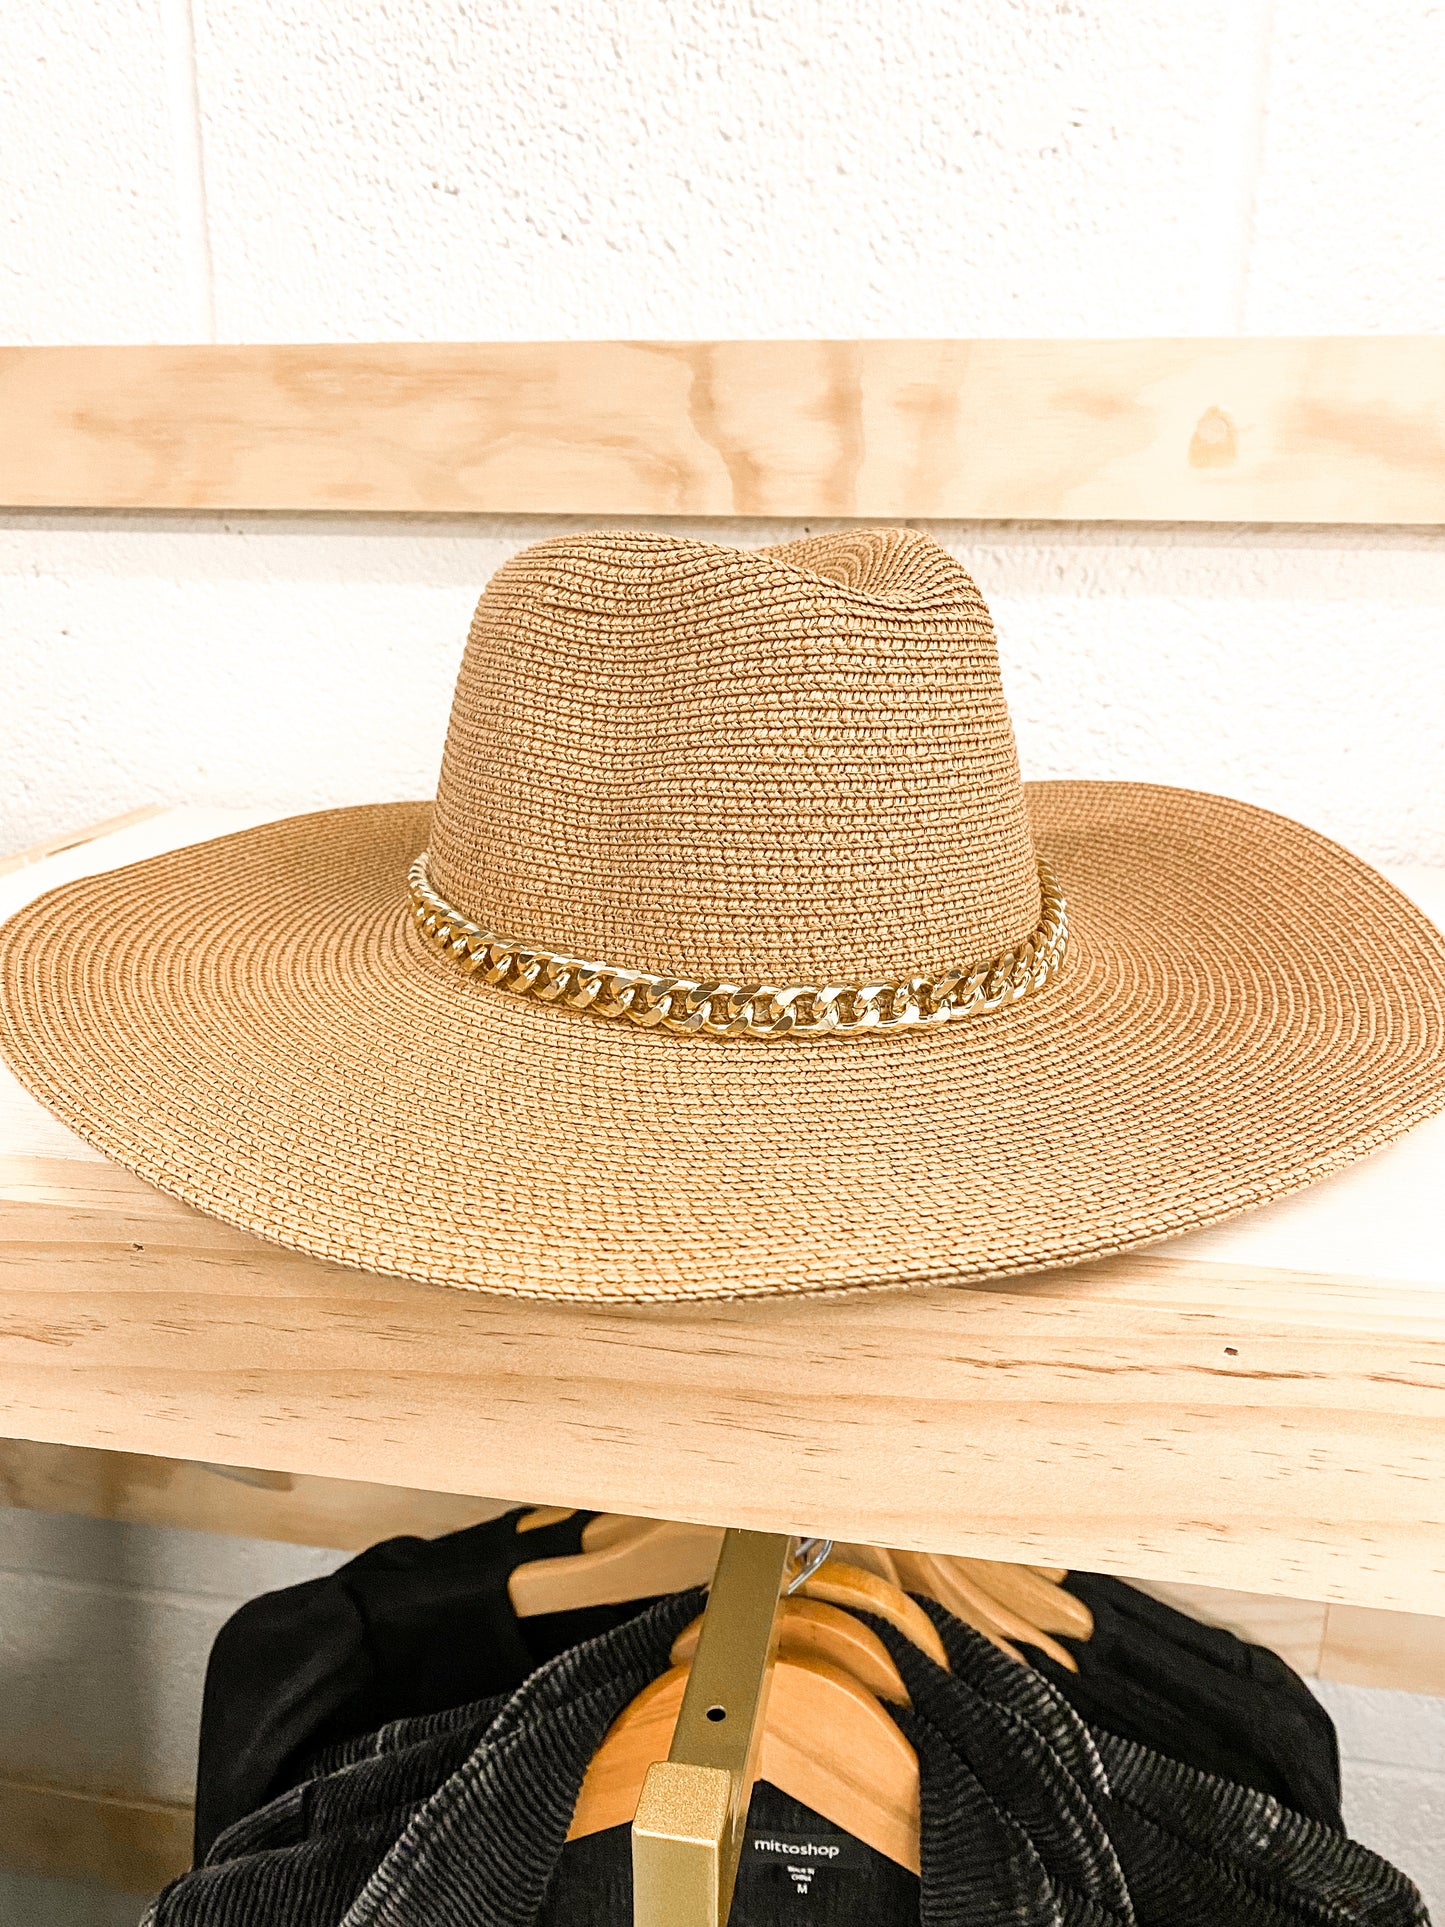 Chain Strap Braided Fashion Sun Hat